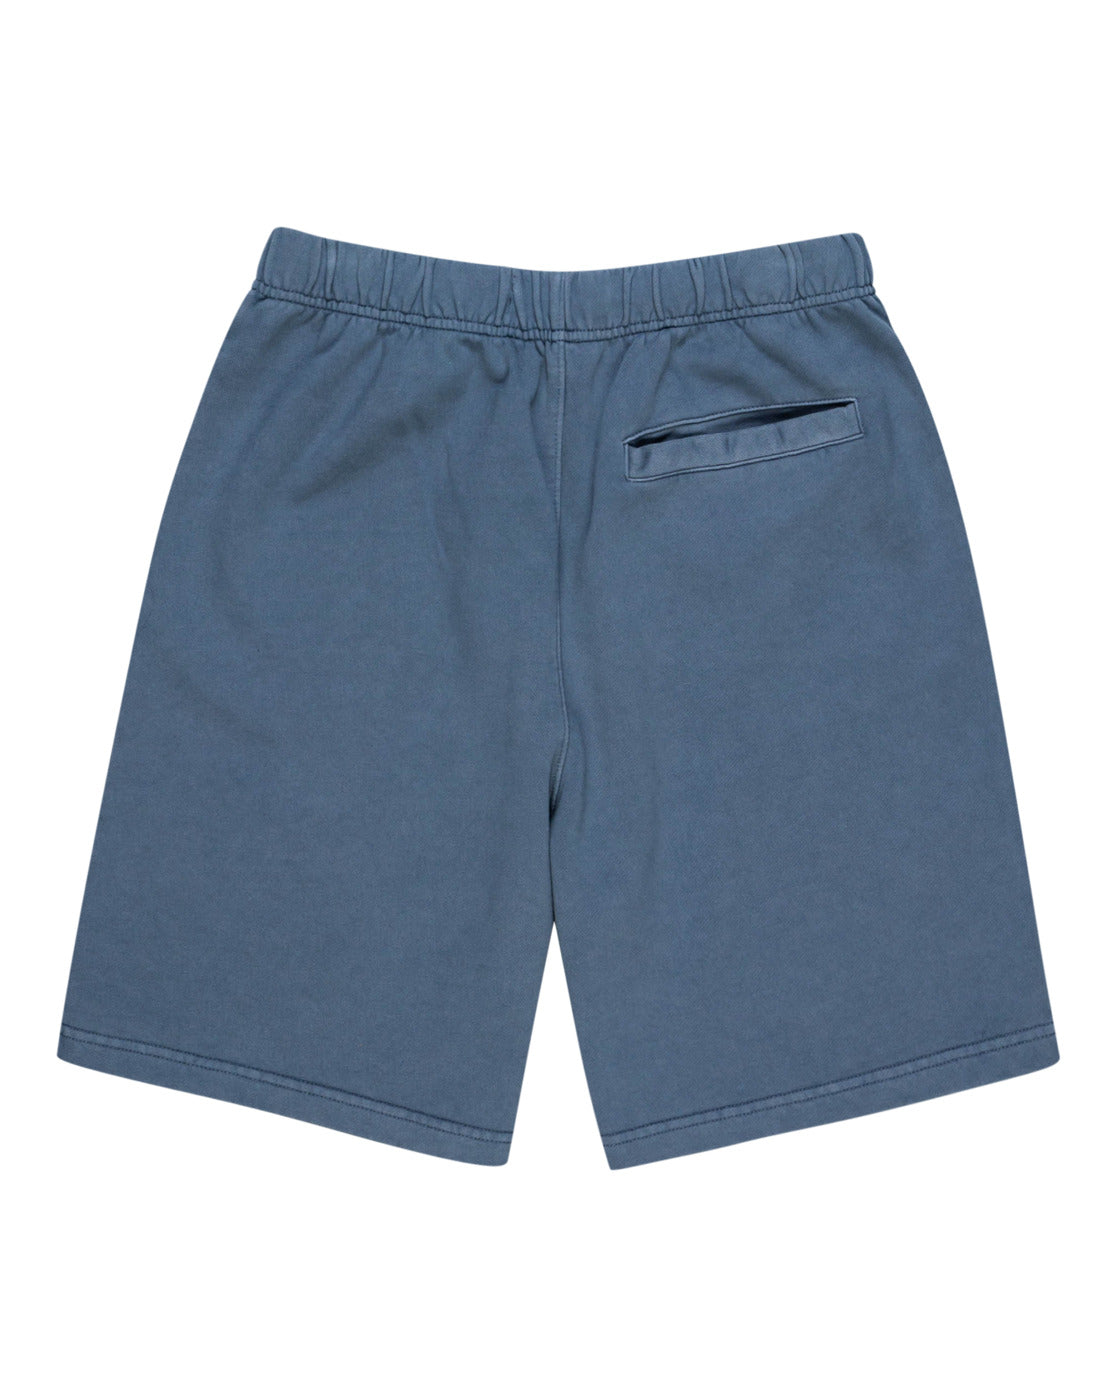 Pantalones cortos Element Cornell 3.0 Shorts Midnight Navy | Element | Pantalones cortos de Hombre | Todos los pantalones de hombre | surfdevils.com